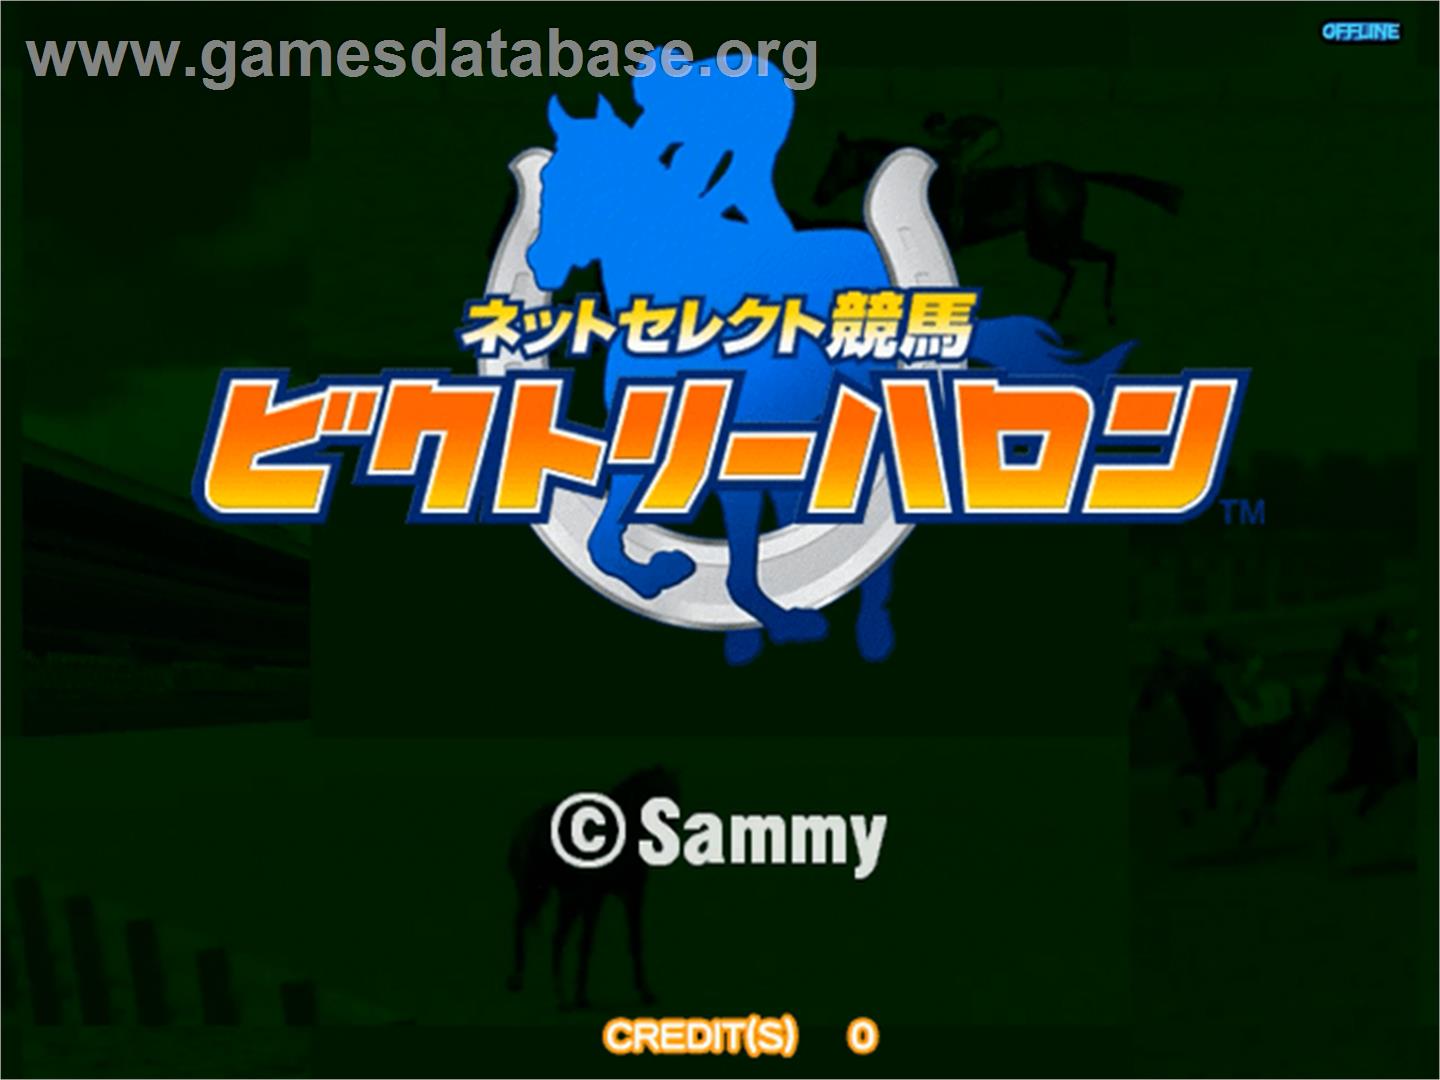 Net Select Keiba Victory Furlong - Sammy Atomiswave - Artwork - Title Screen